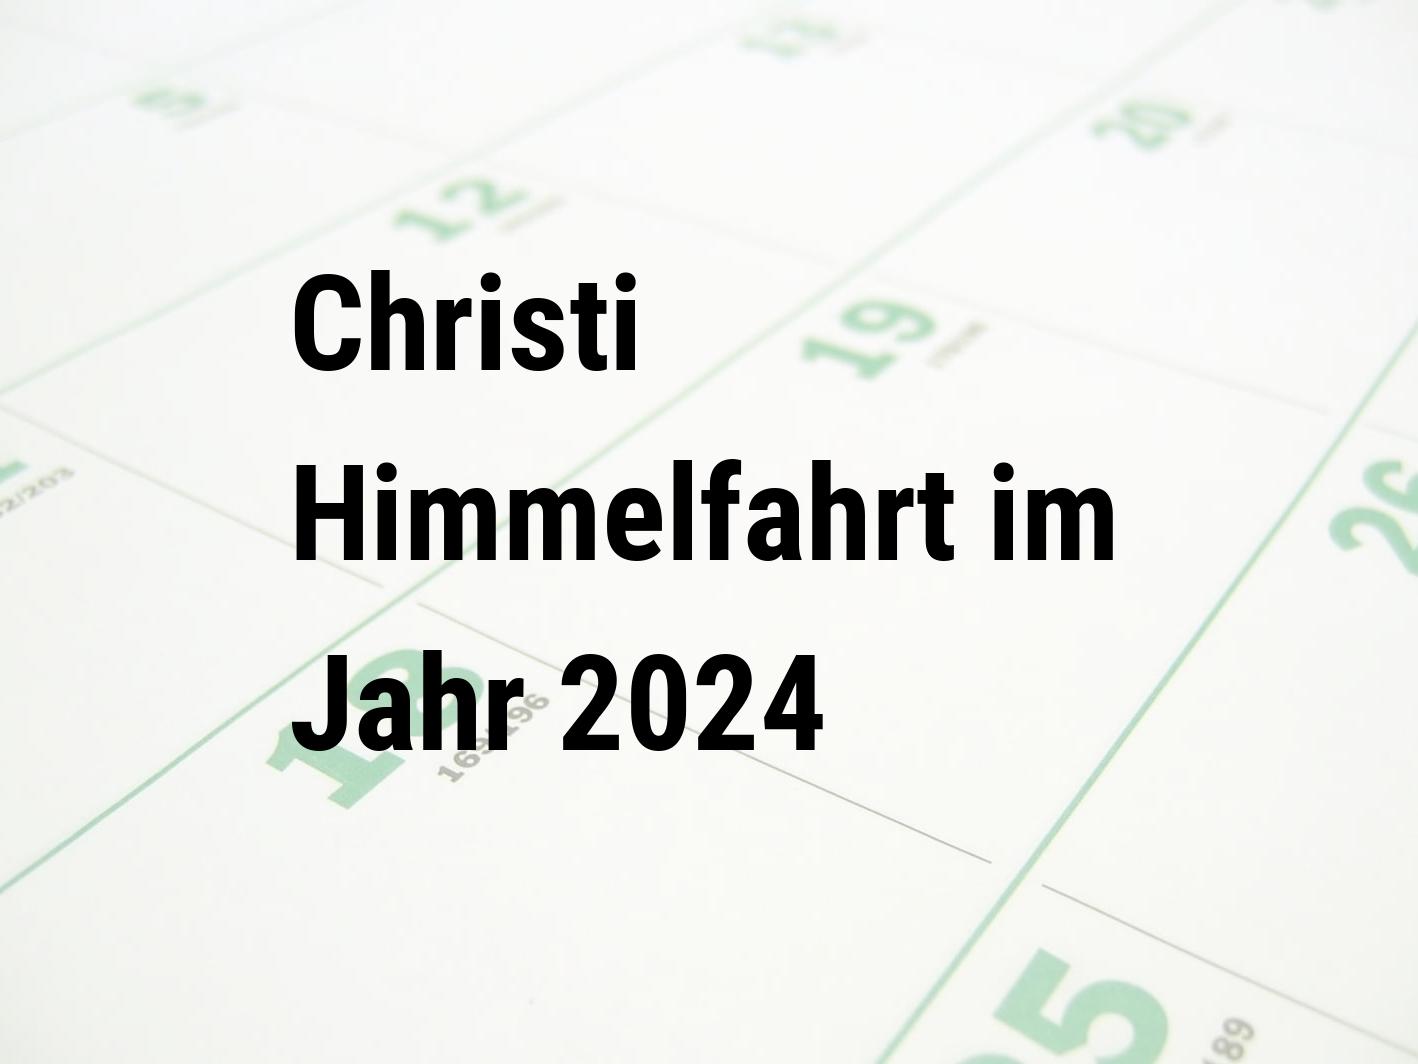 Christi Himmelfahrt 2024 Calendar Center